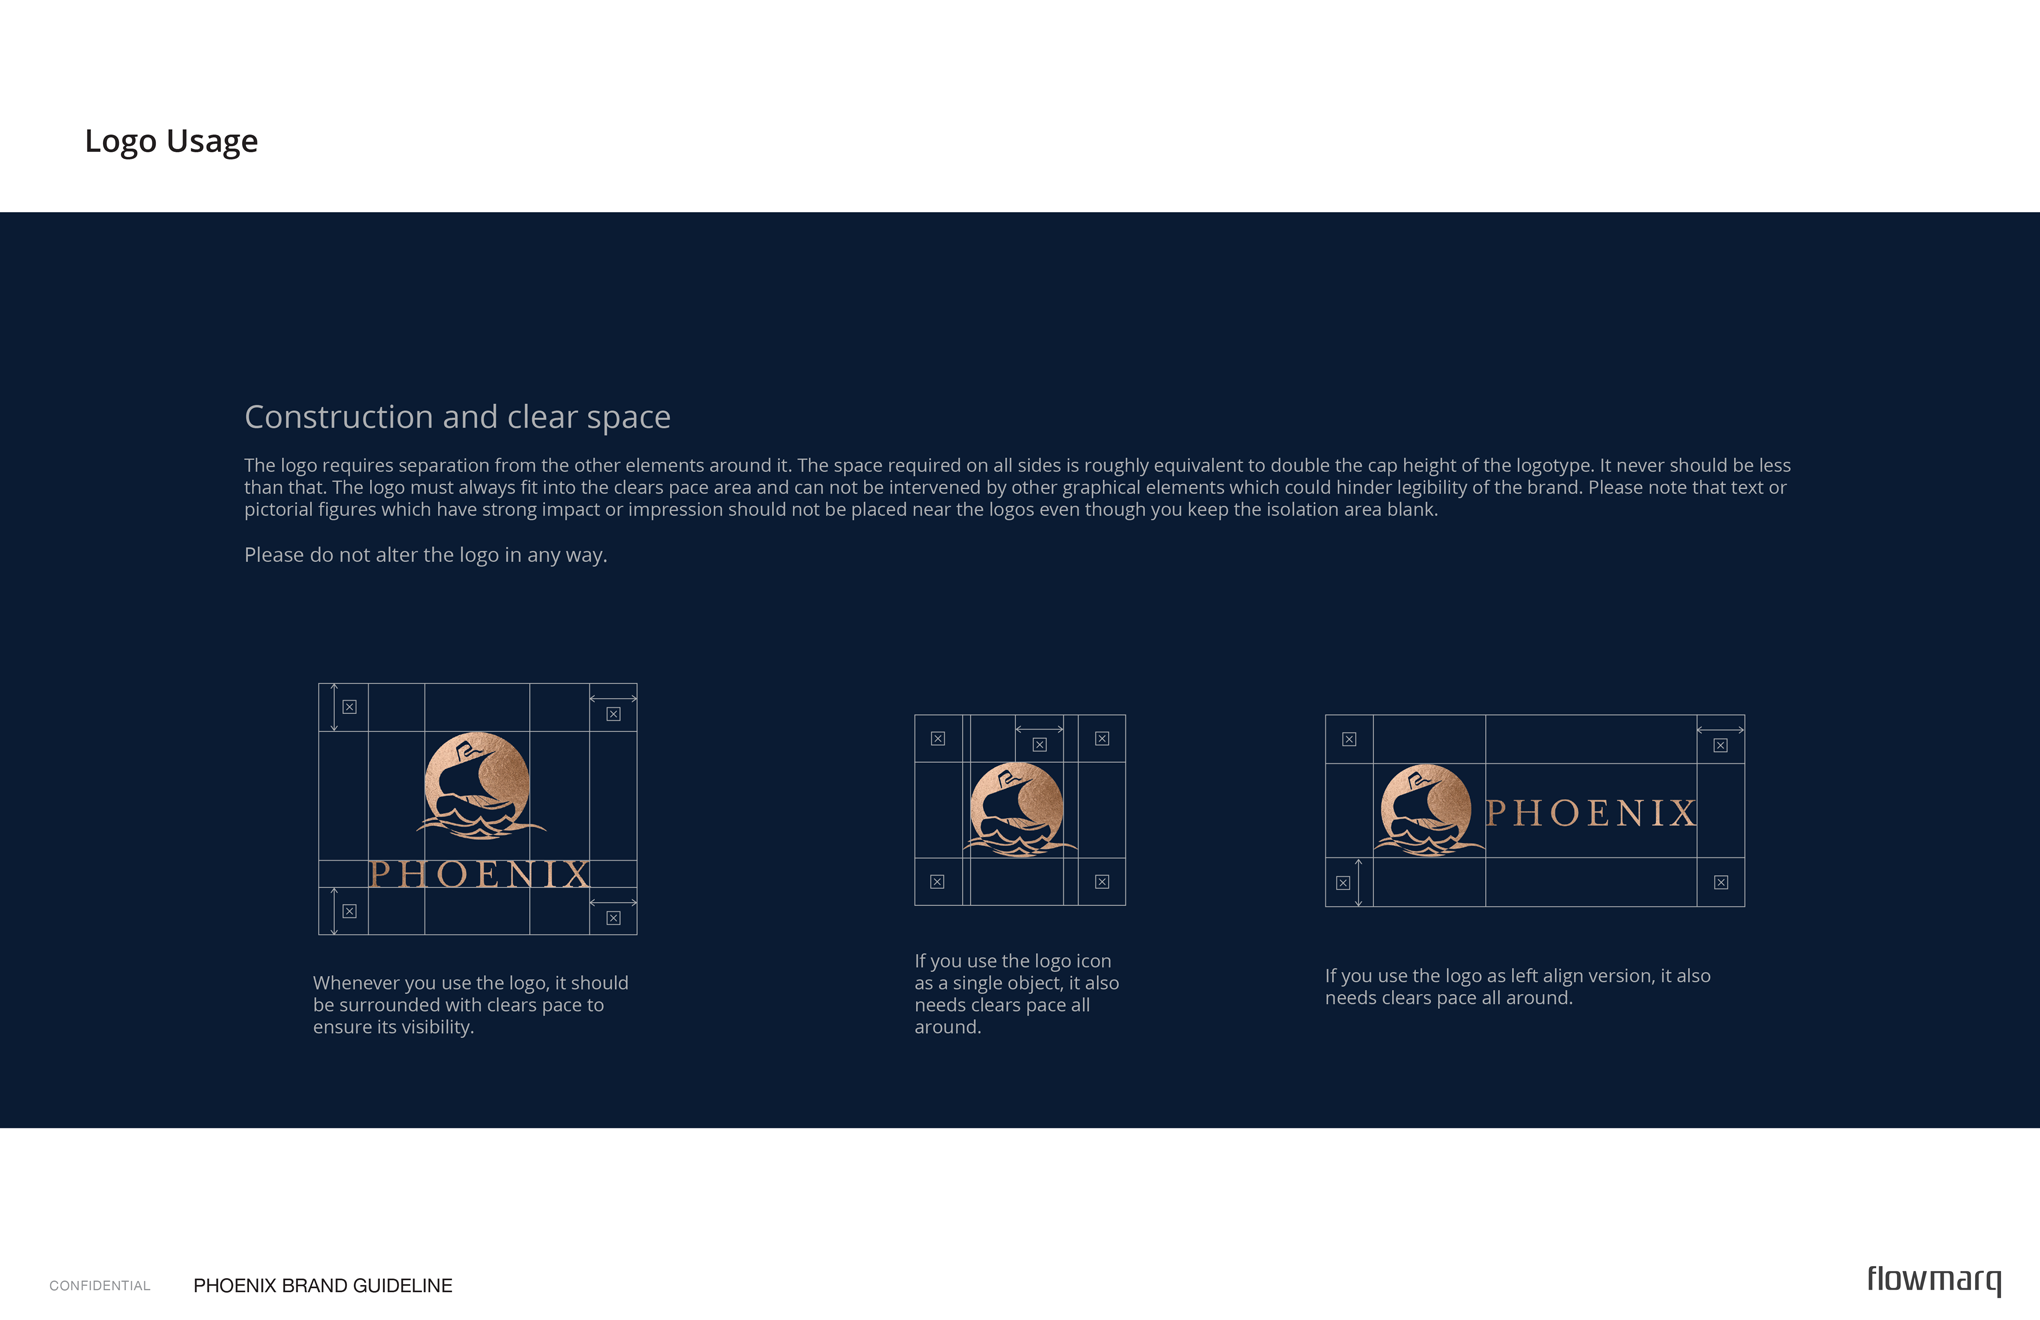 Phoenix - branding guide logo usage & space